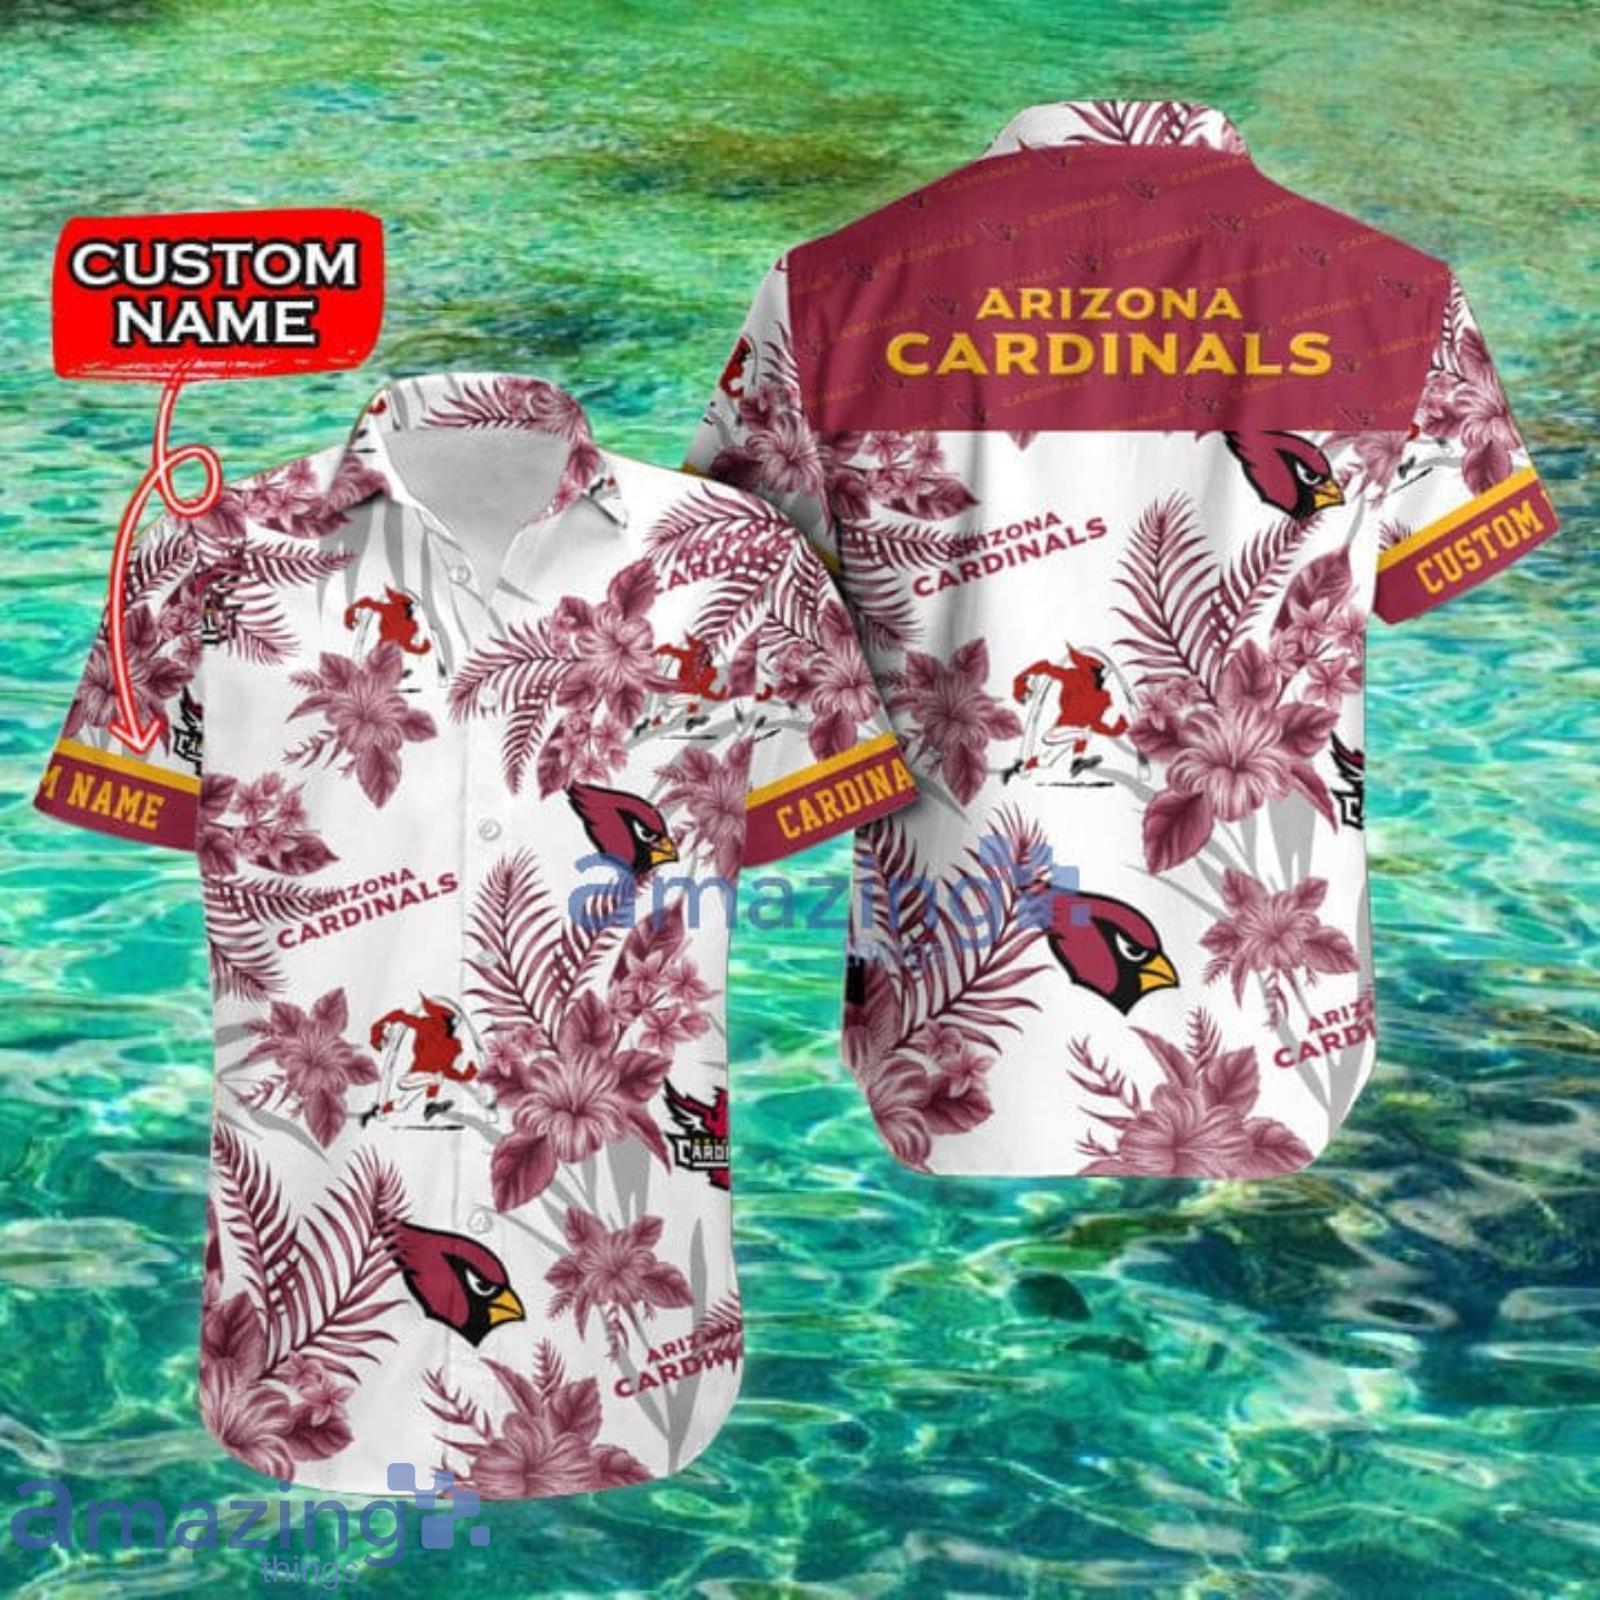 Arizona Cardinals NFL Personalized Name Jersey Print